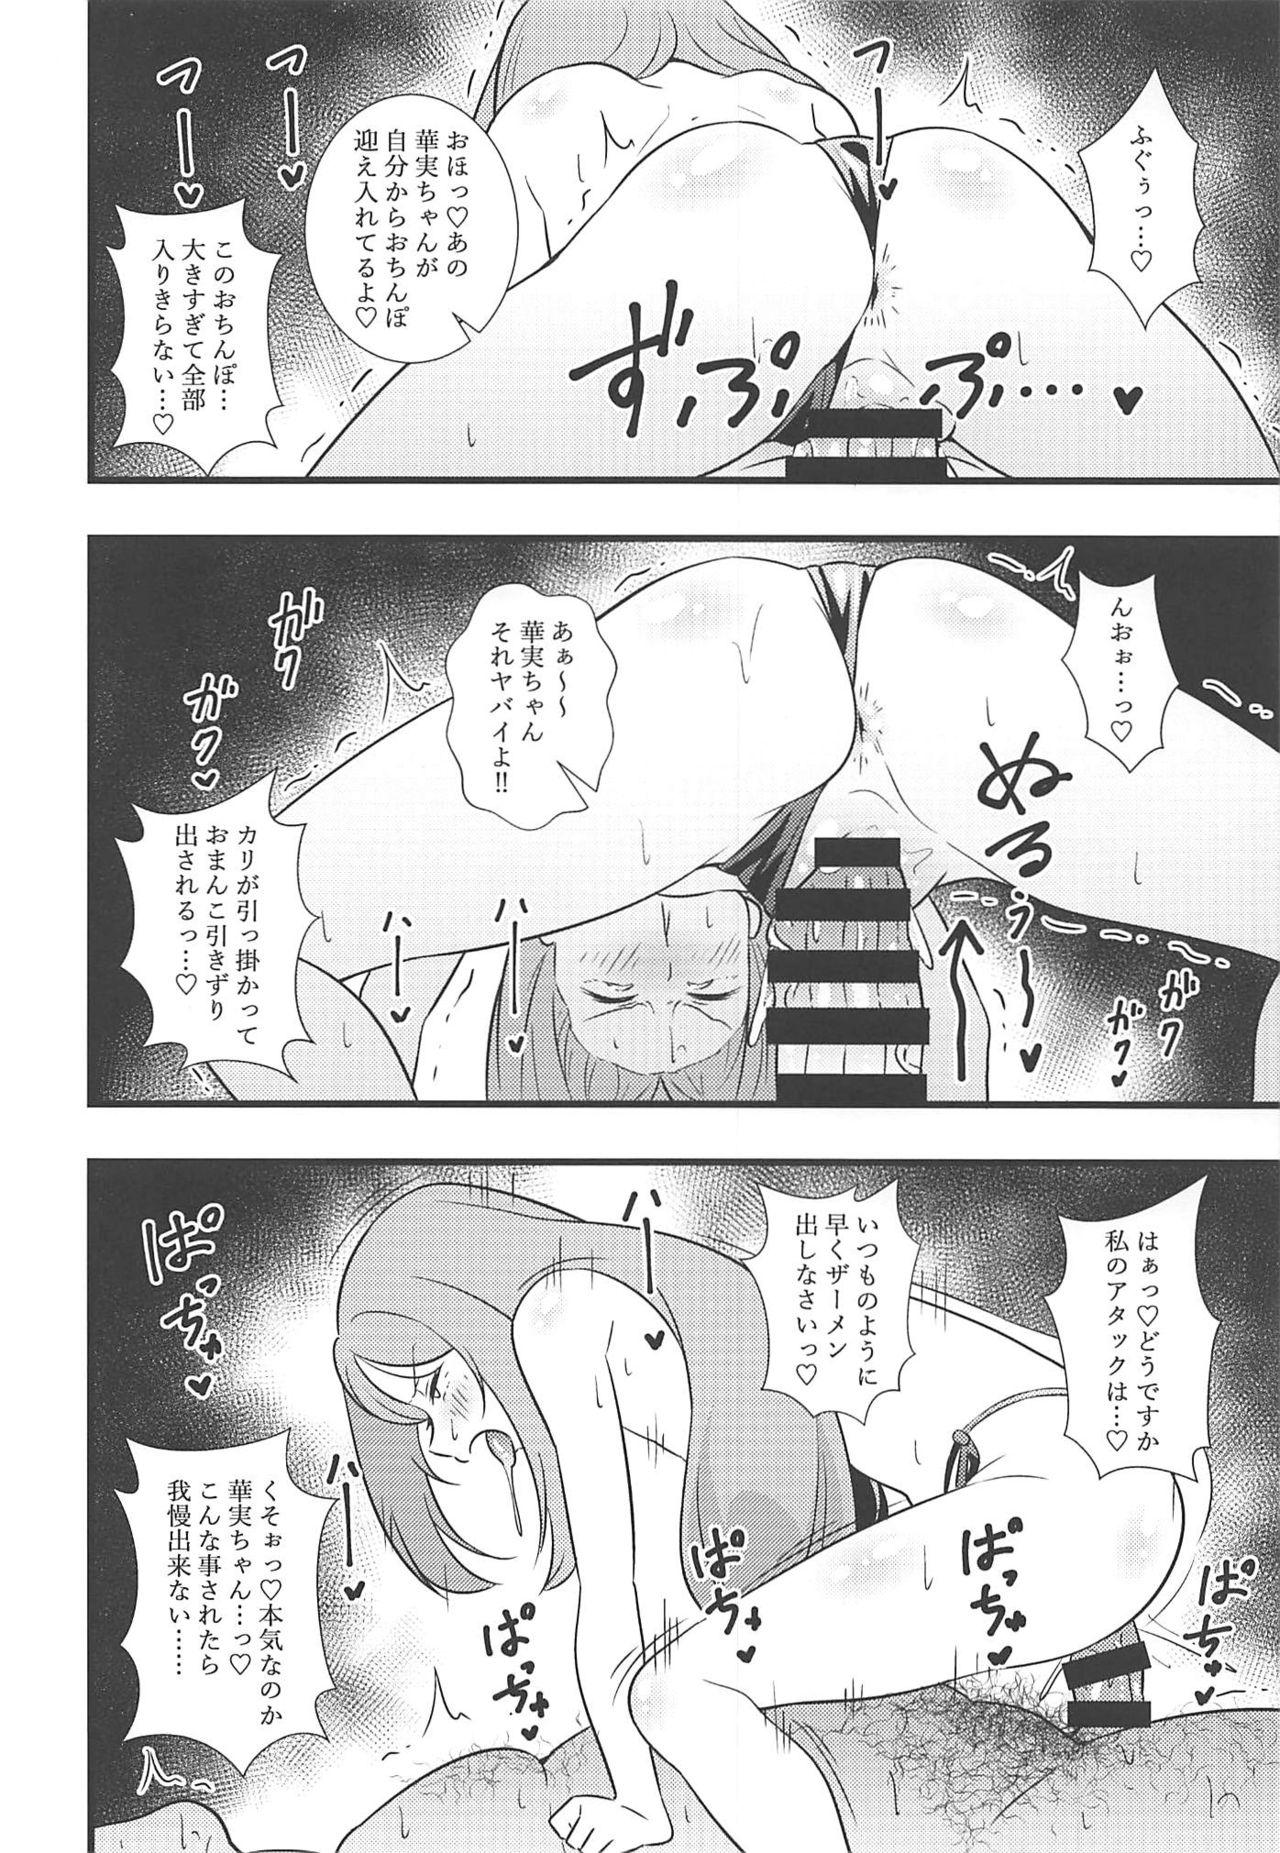 Man Shouten! Harame Ore no Ragna Rock!! Risei ga Buttobu made Tanetsuke Rape - Battle spirits Alt - Page 11